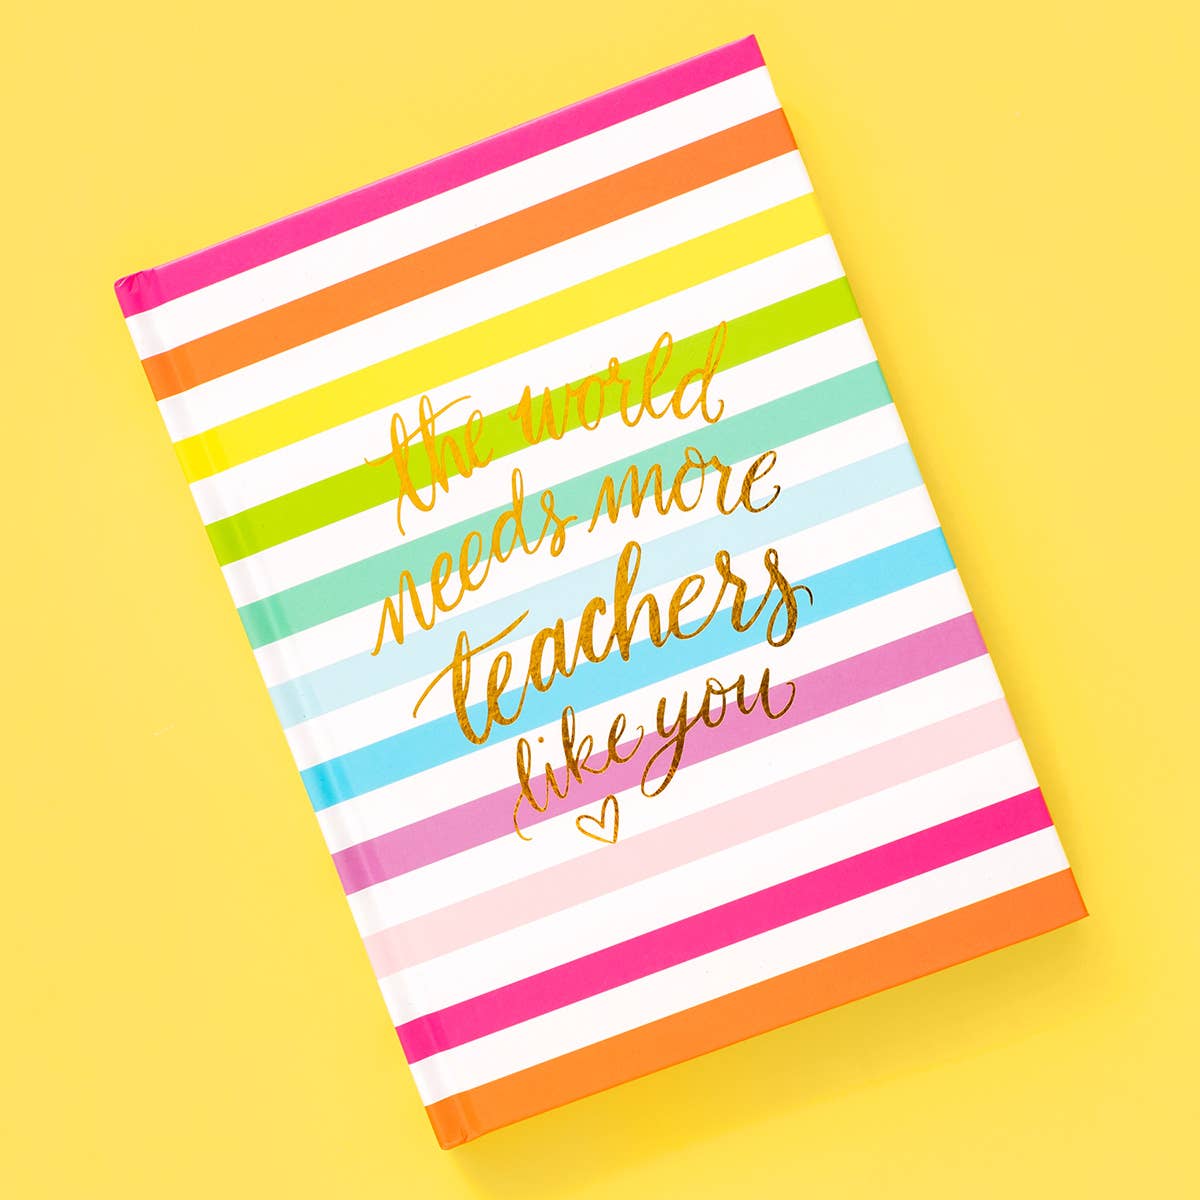 Rainbow Stripe Teacher Notebook